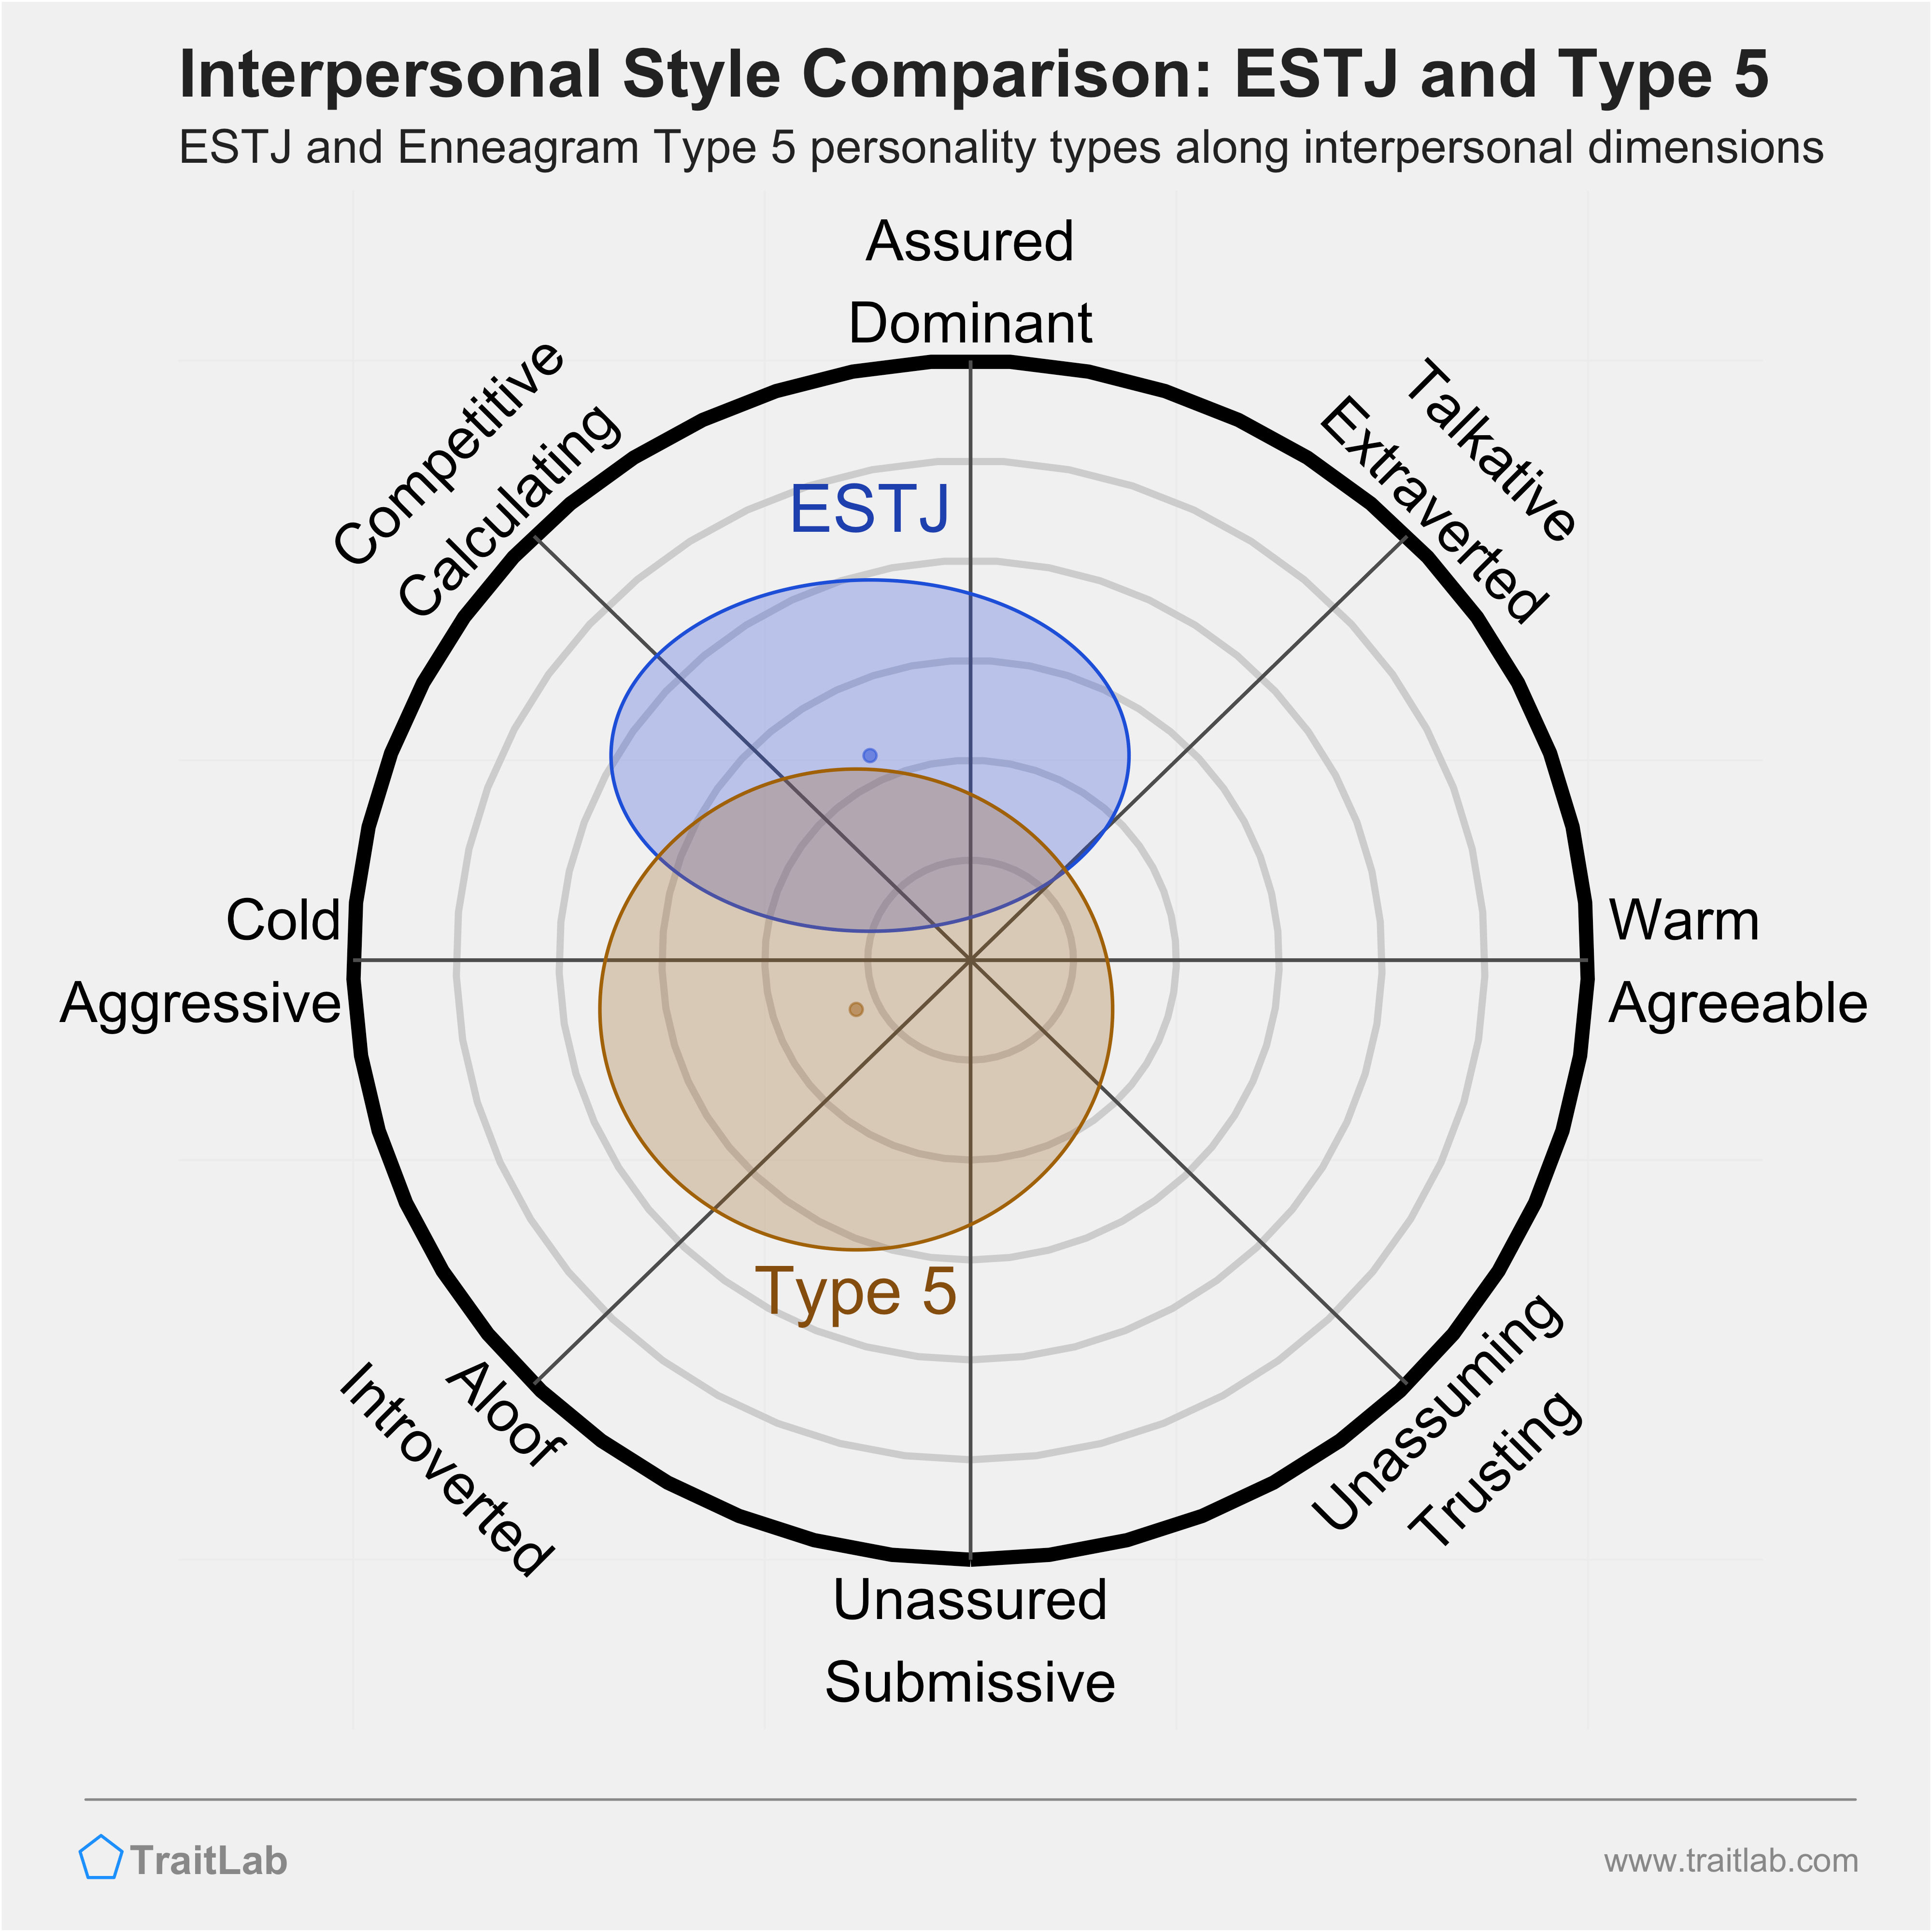 Enneagram ESTJ and Type 5 comparison across interpersonal dimensions